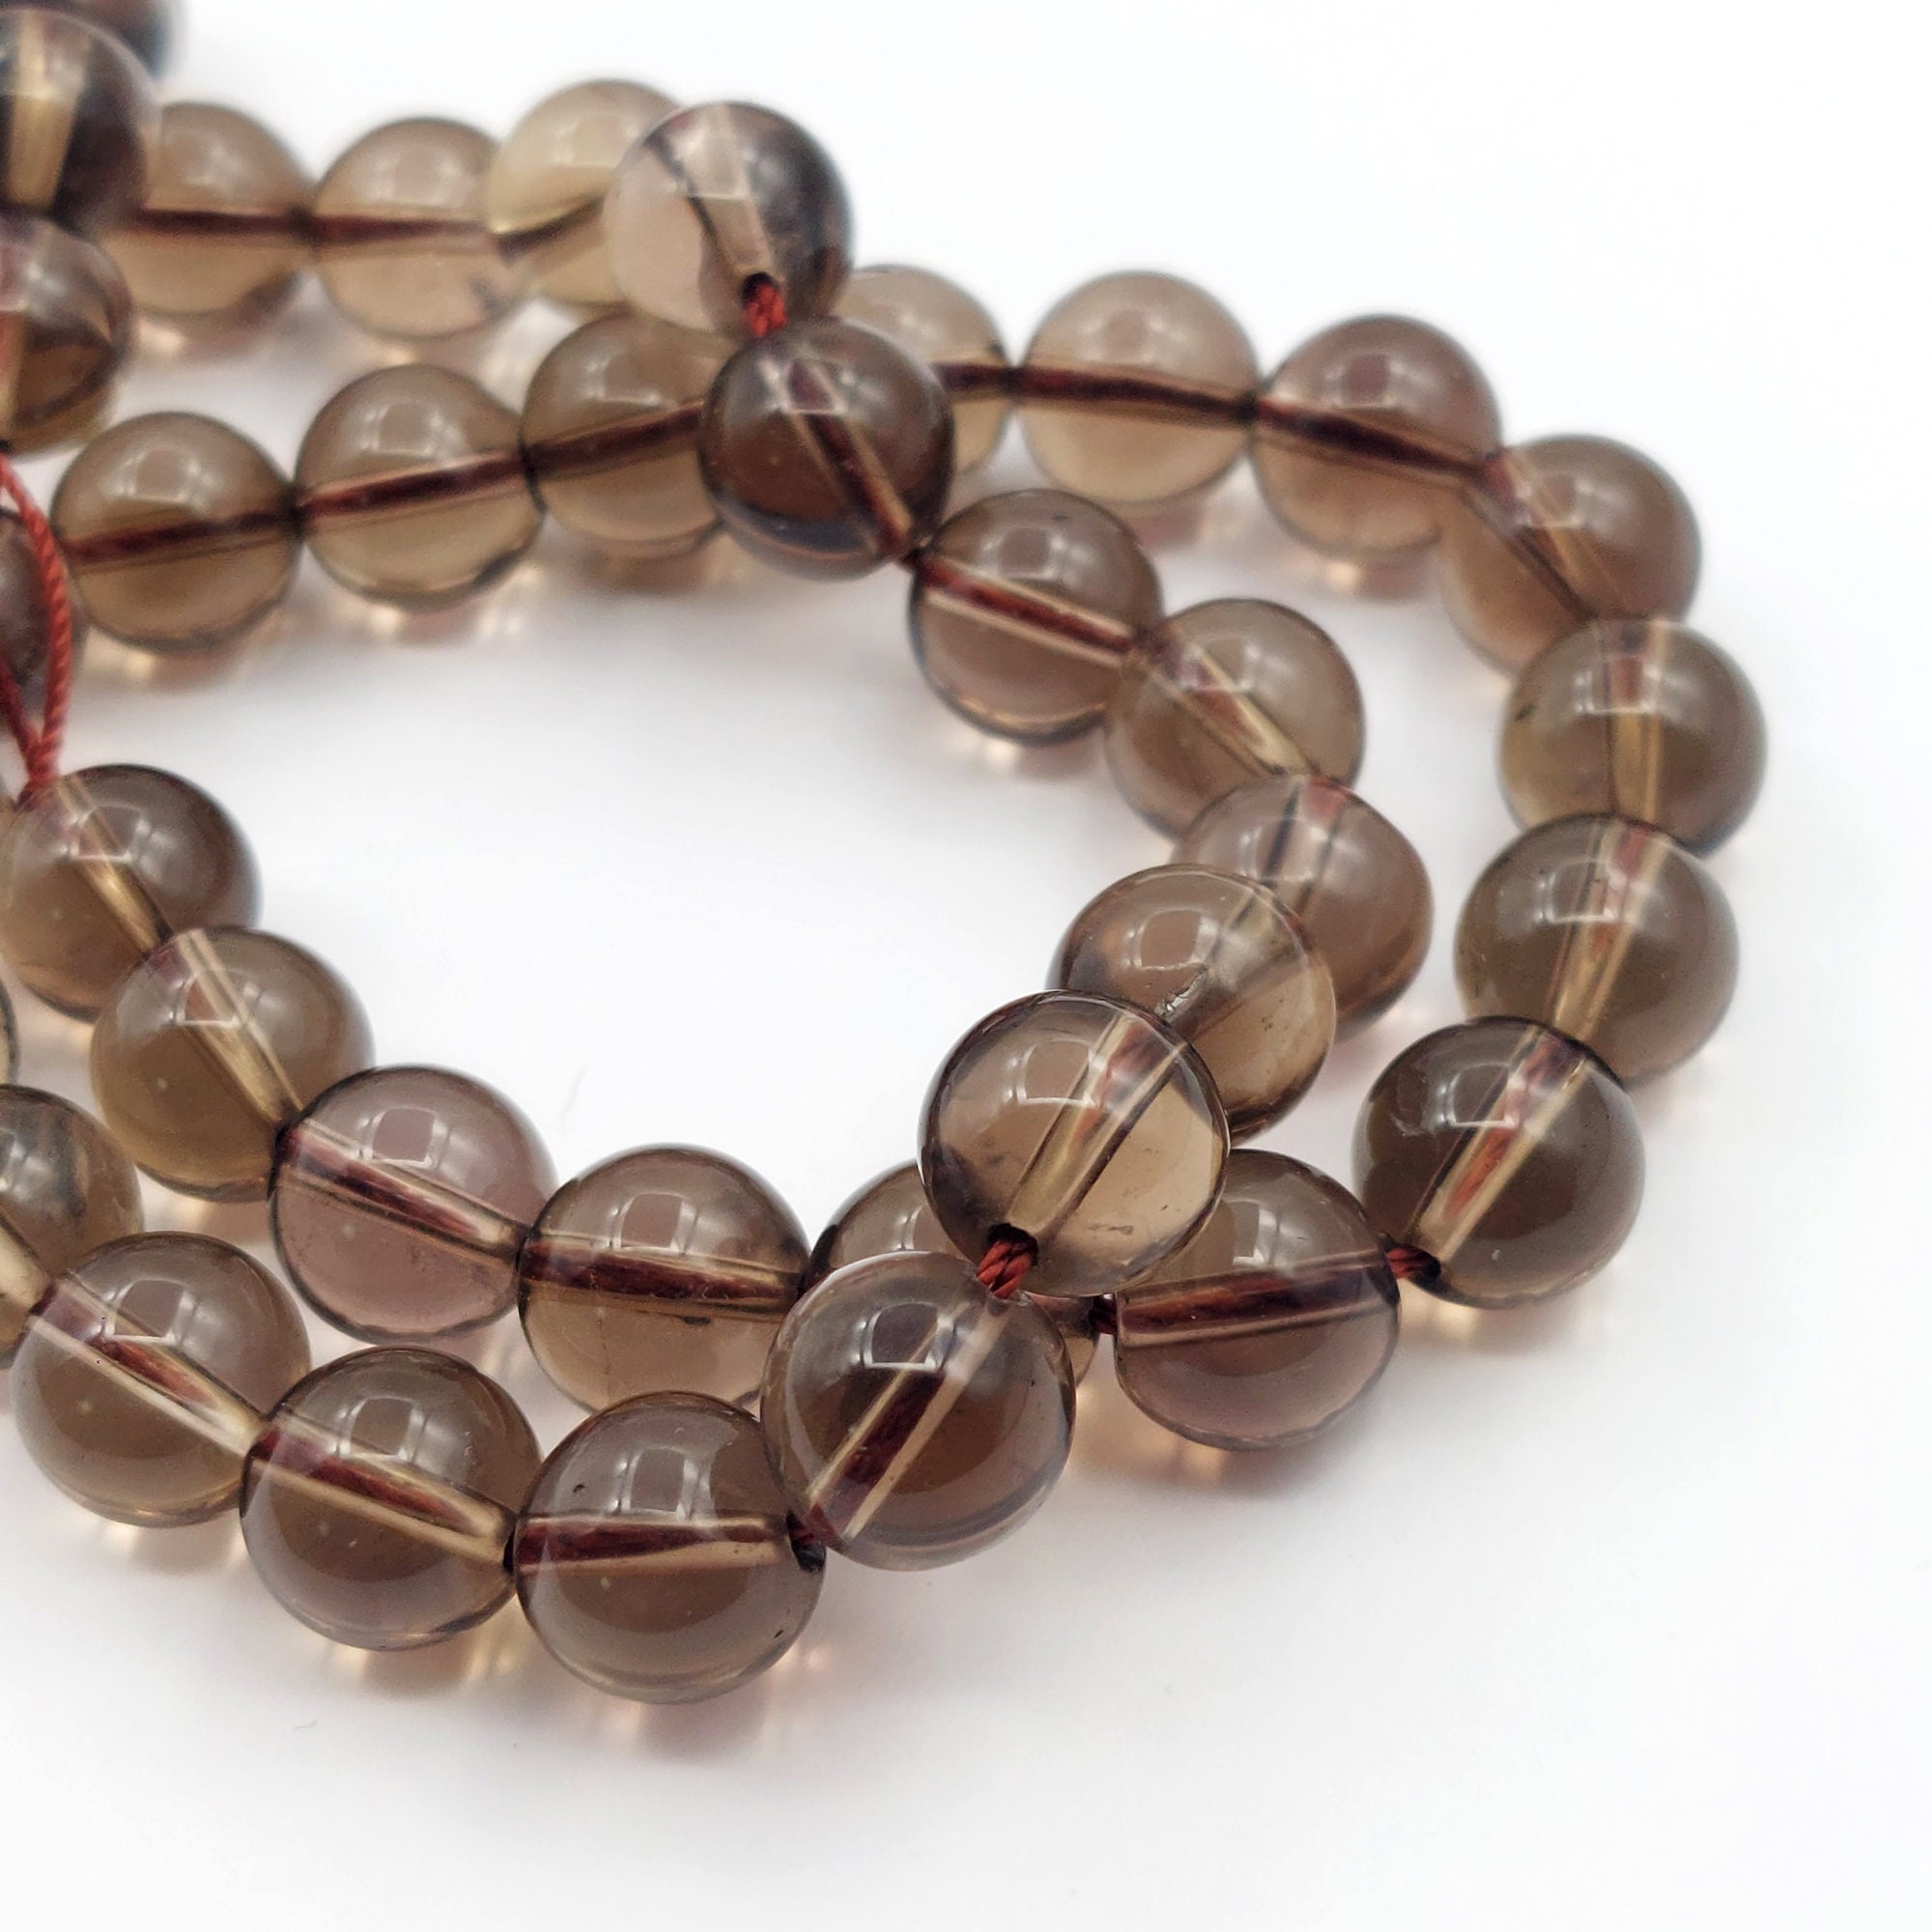 Large Hole (2mm) Beads - Natural Clear Quartz Semi-precious Gemstone Round  Beads - 8mm - 15 strand